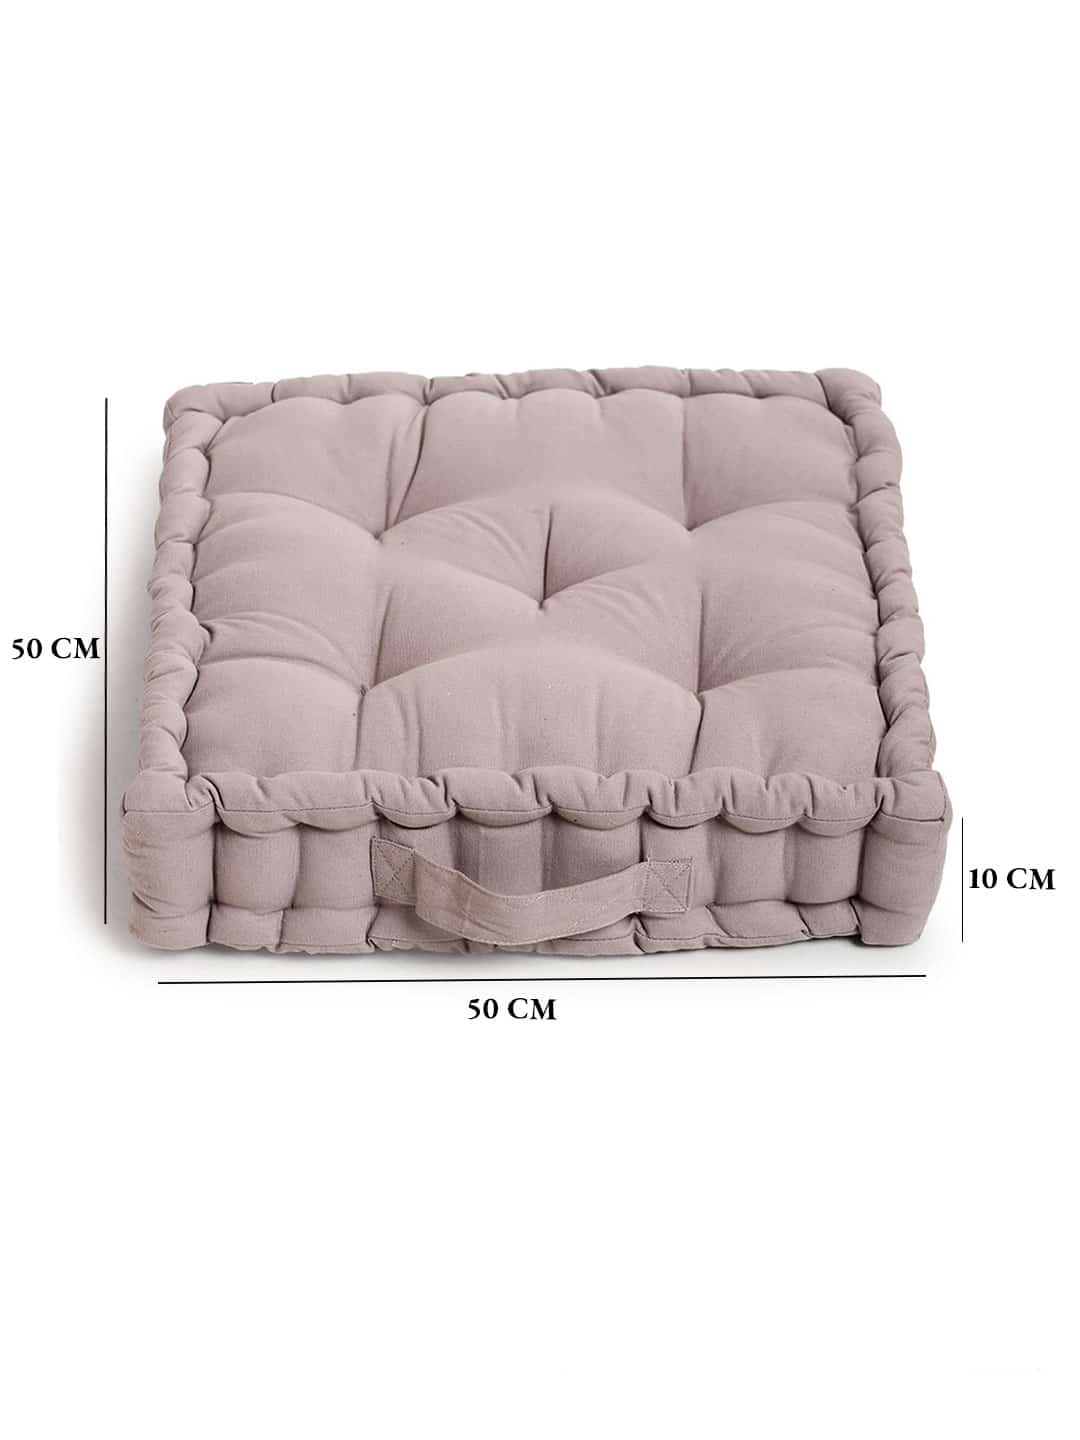 Cloudy Matlas Floor Cushion